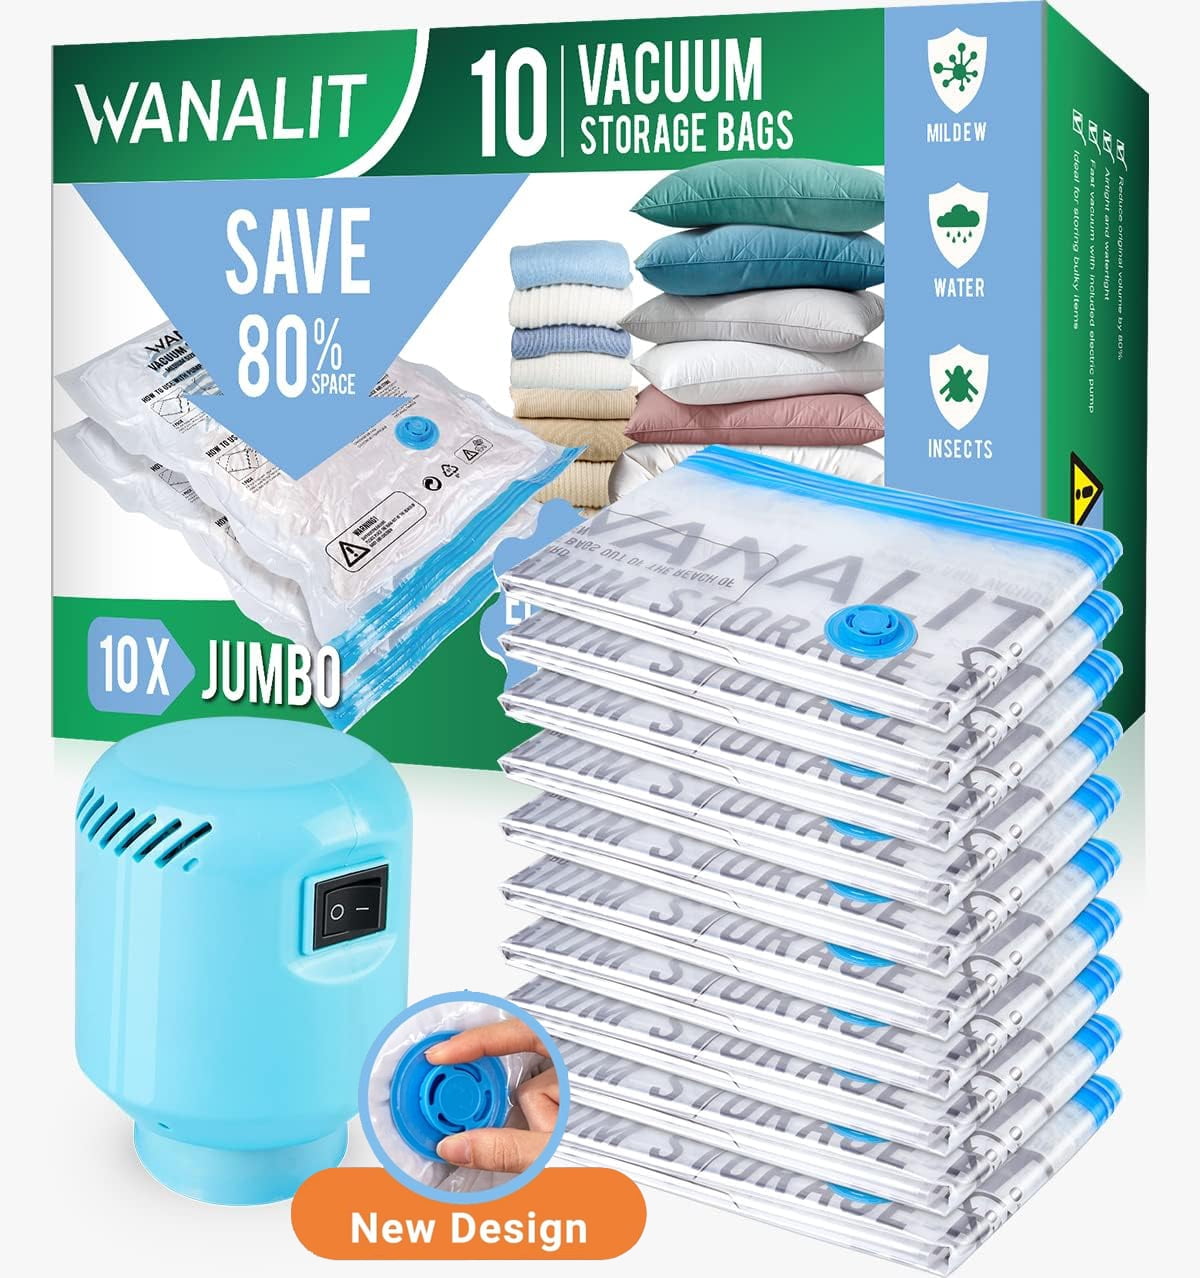 10X JUMBO Vacuum Storage Bags - Home & Lifestyle > Personal